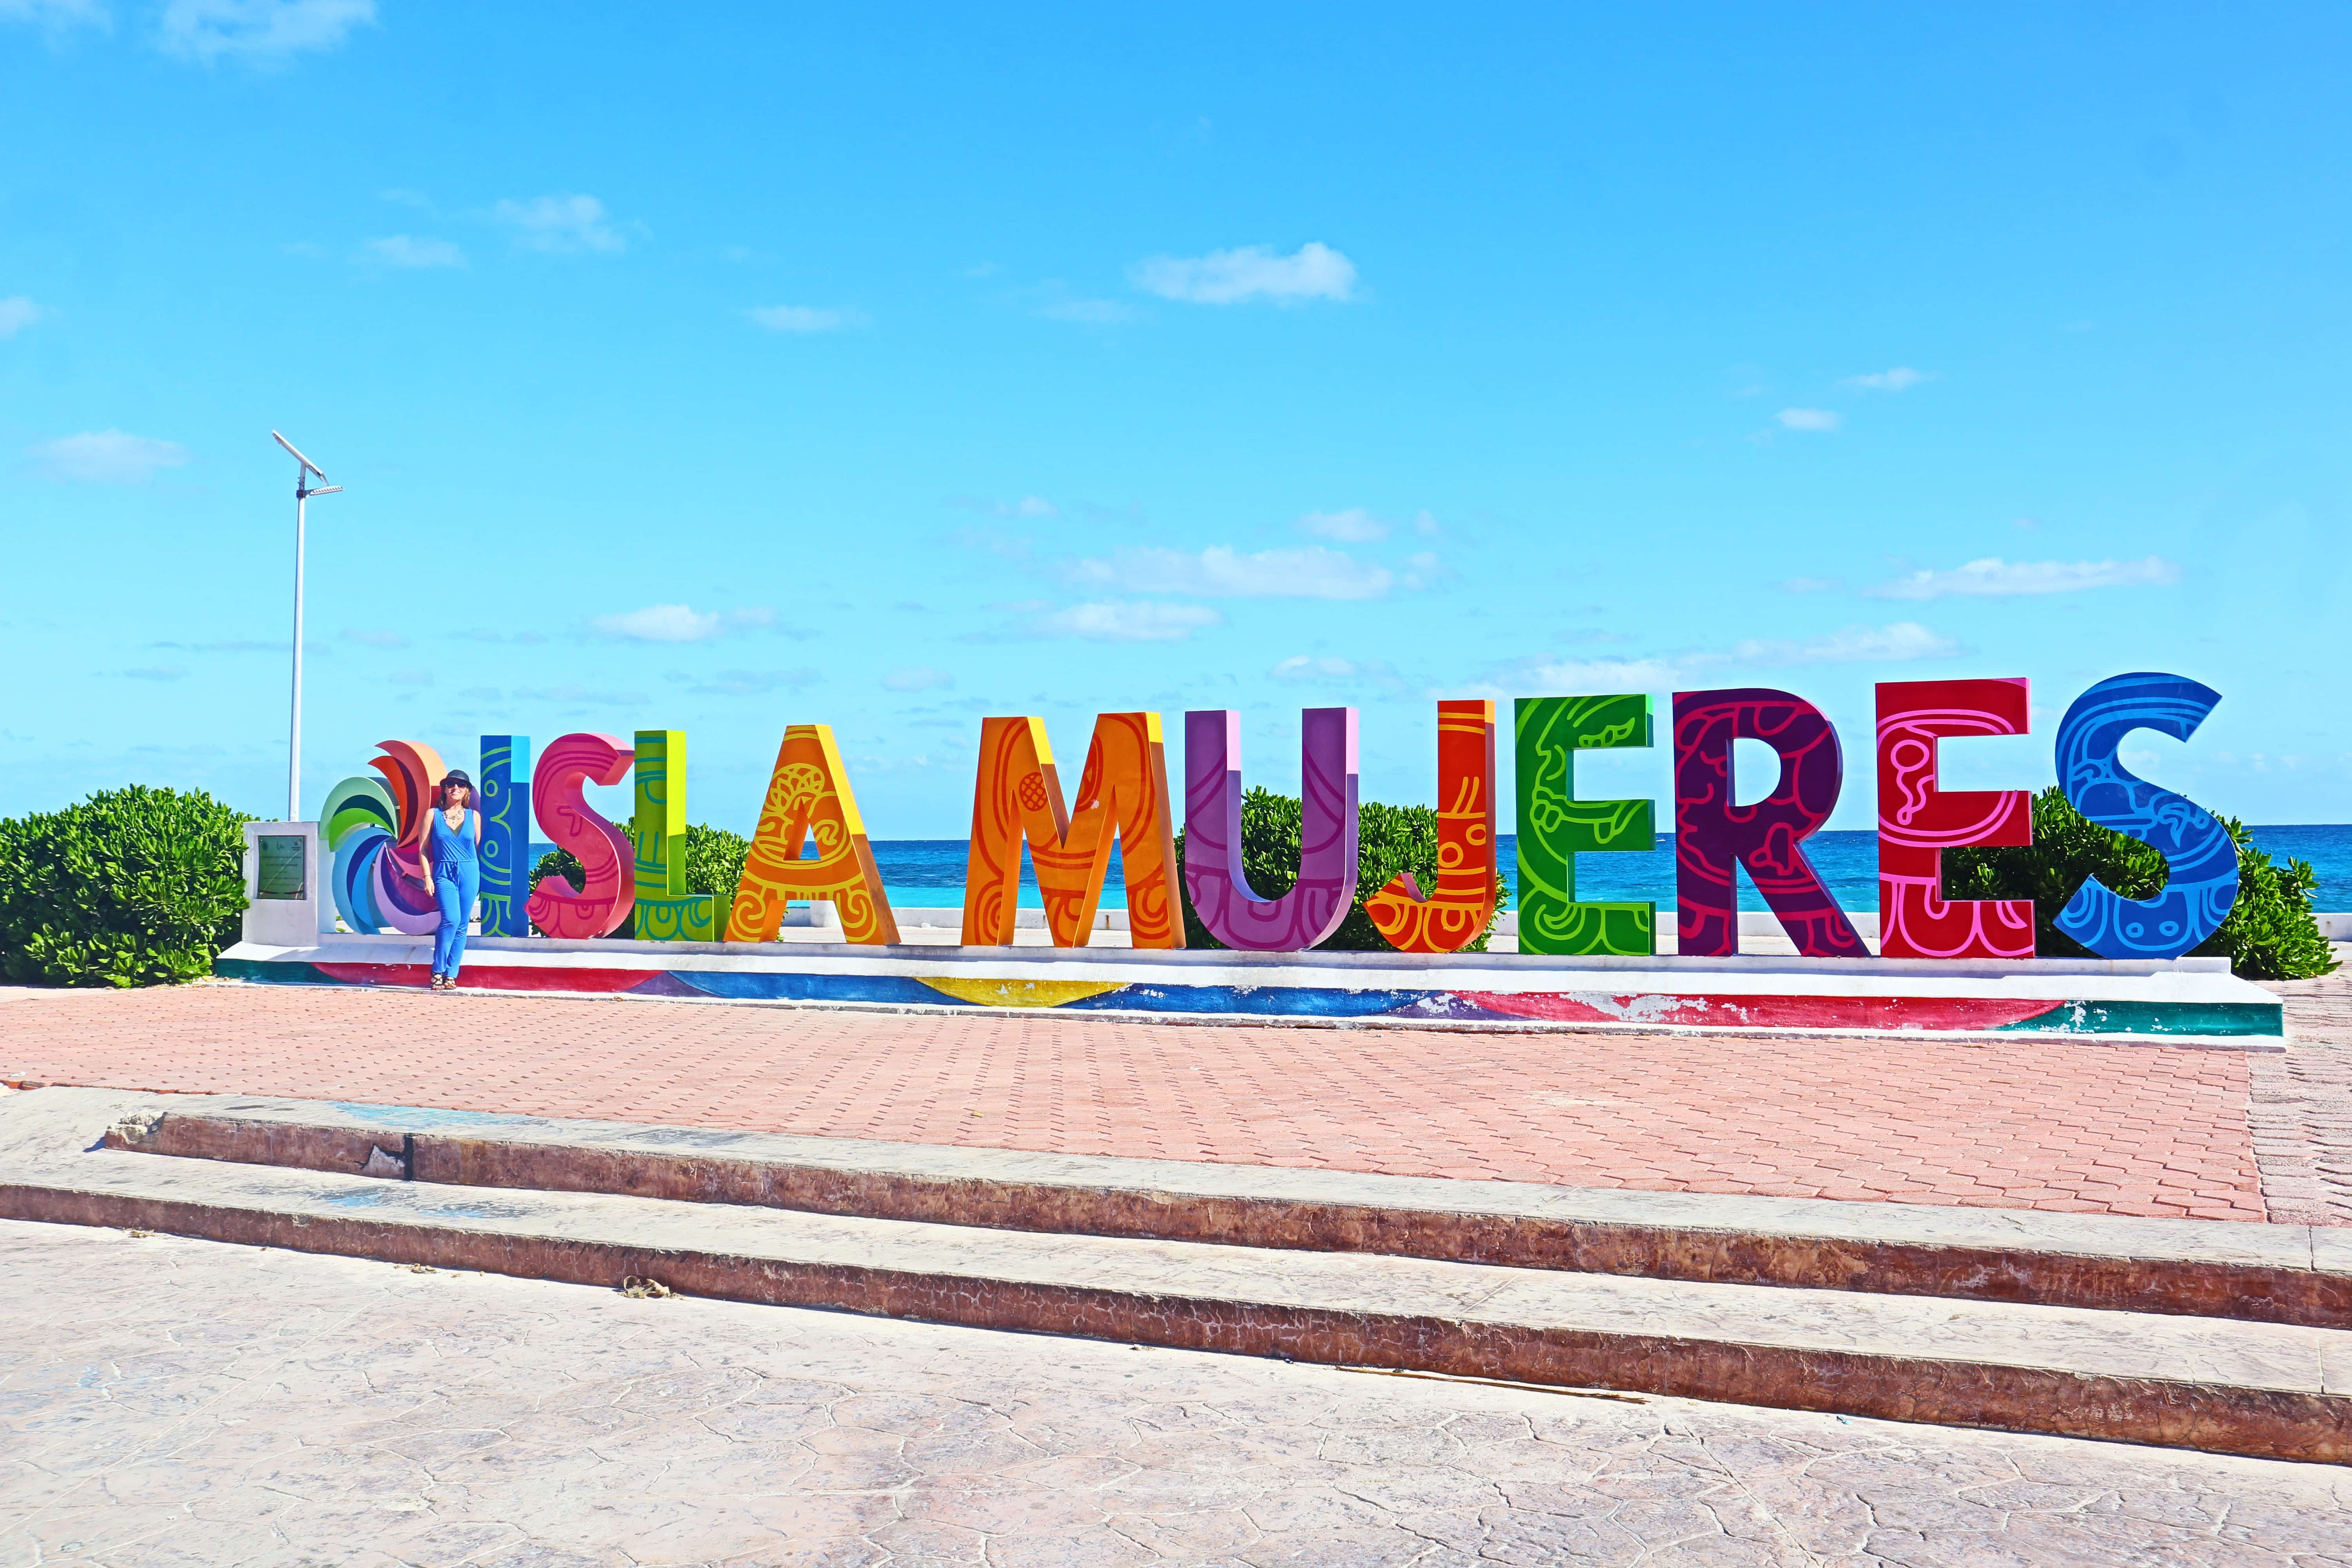 Isla Mujeres Sign